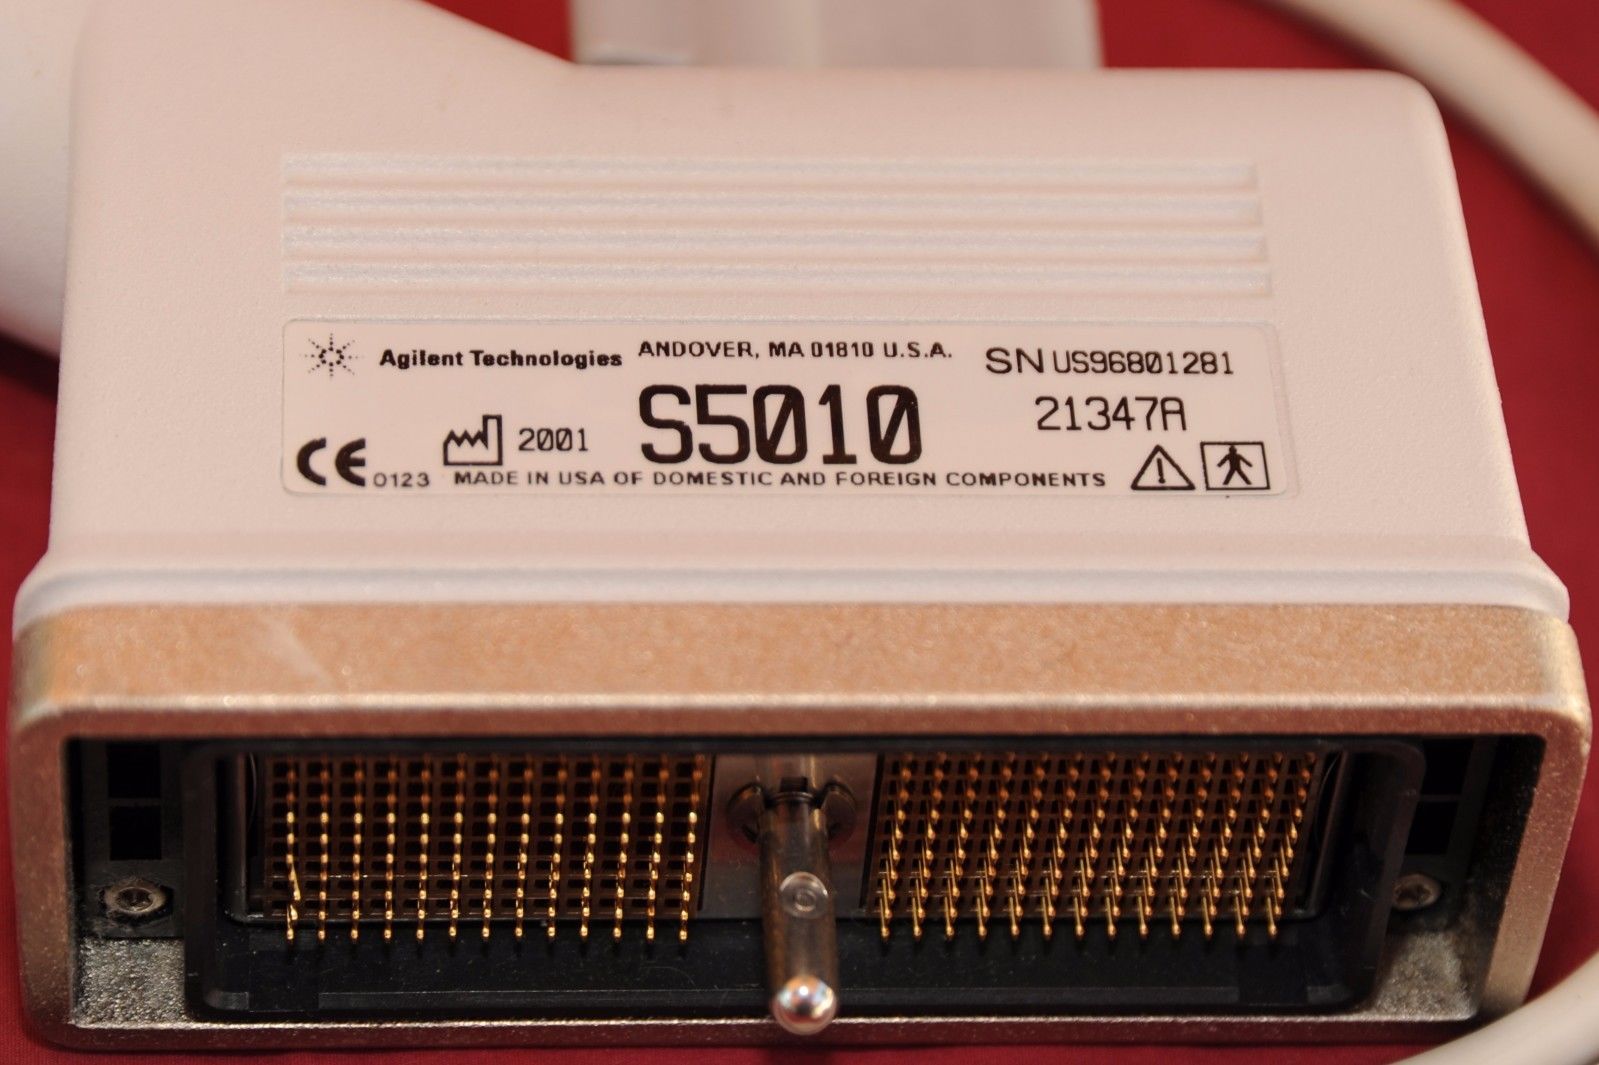 HP Agilent Ultrasound probe S5010 / Transducer Model 21347A